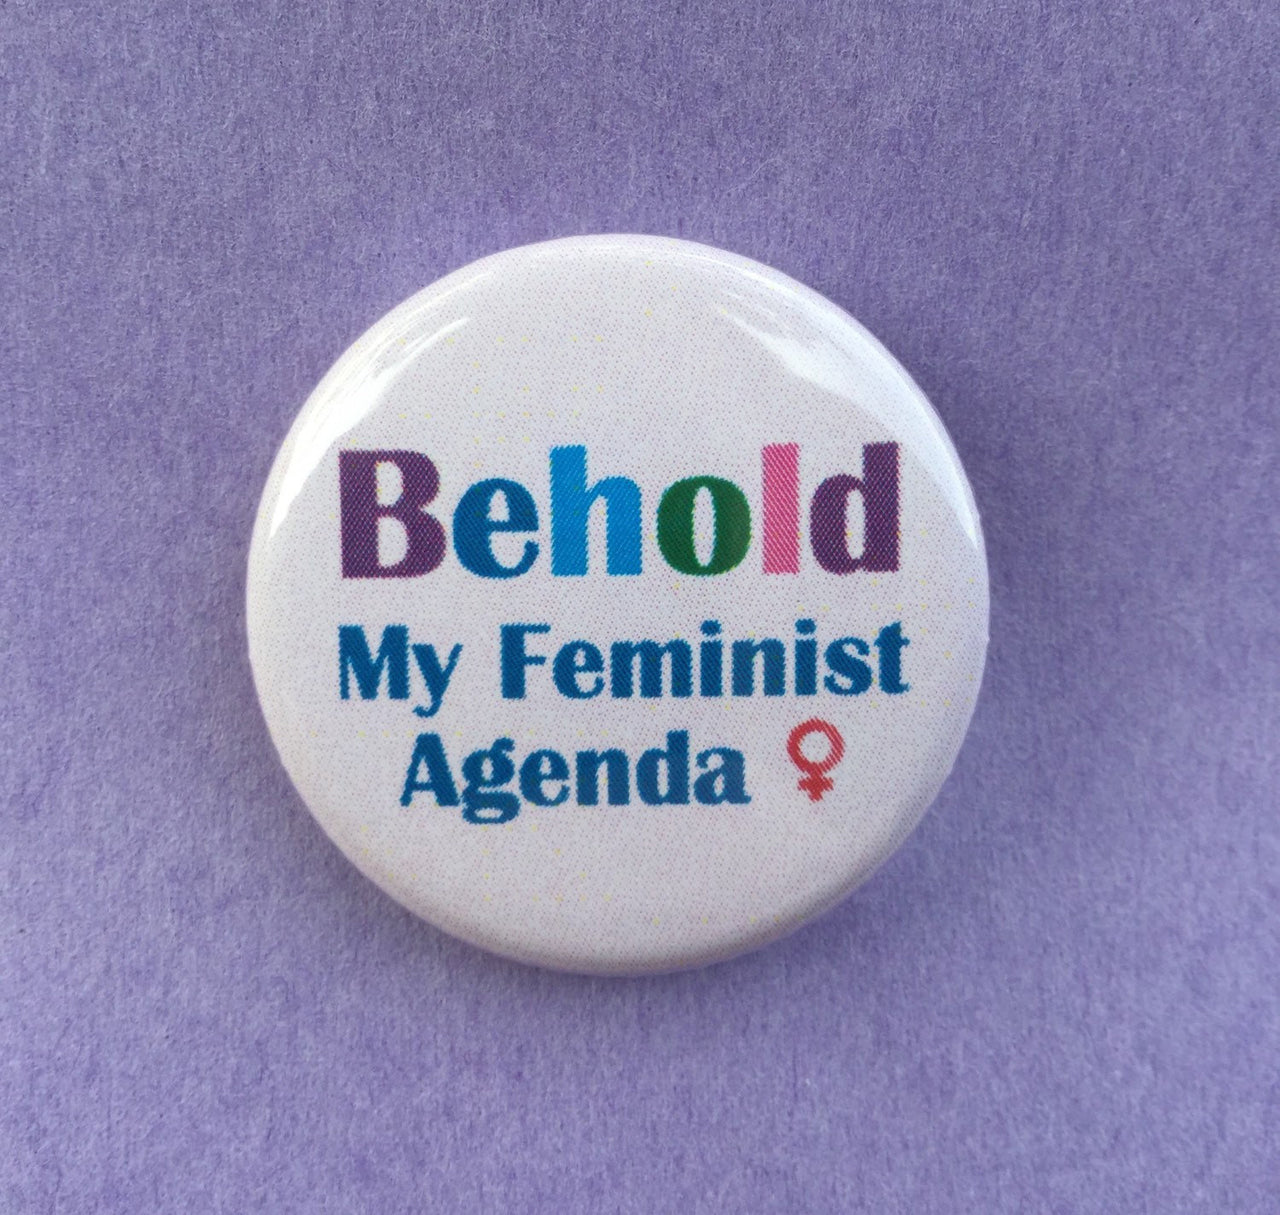 Behold my feminist agenda / Feminist button - Radical Buttons